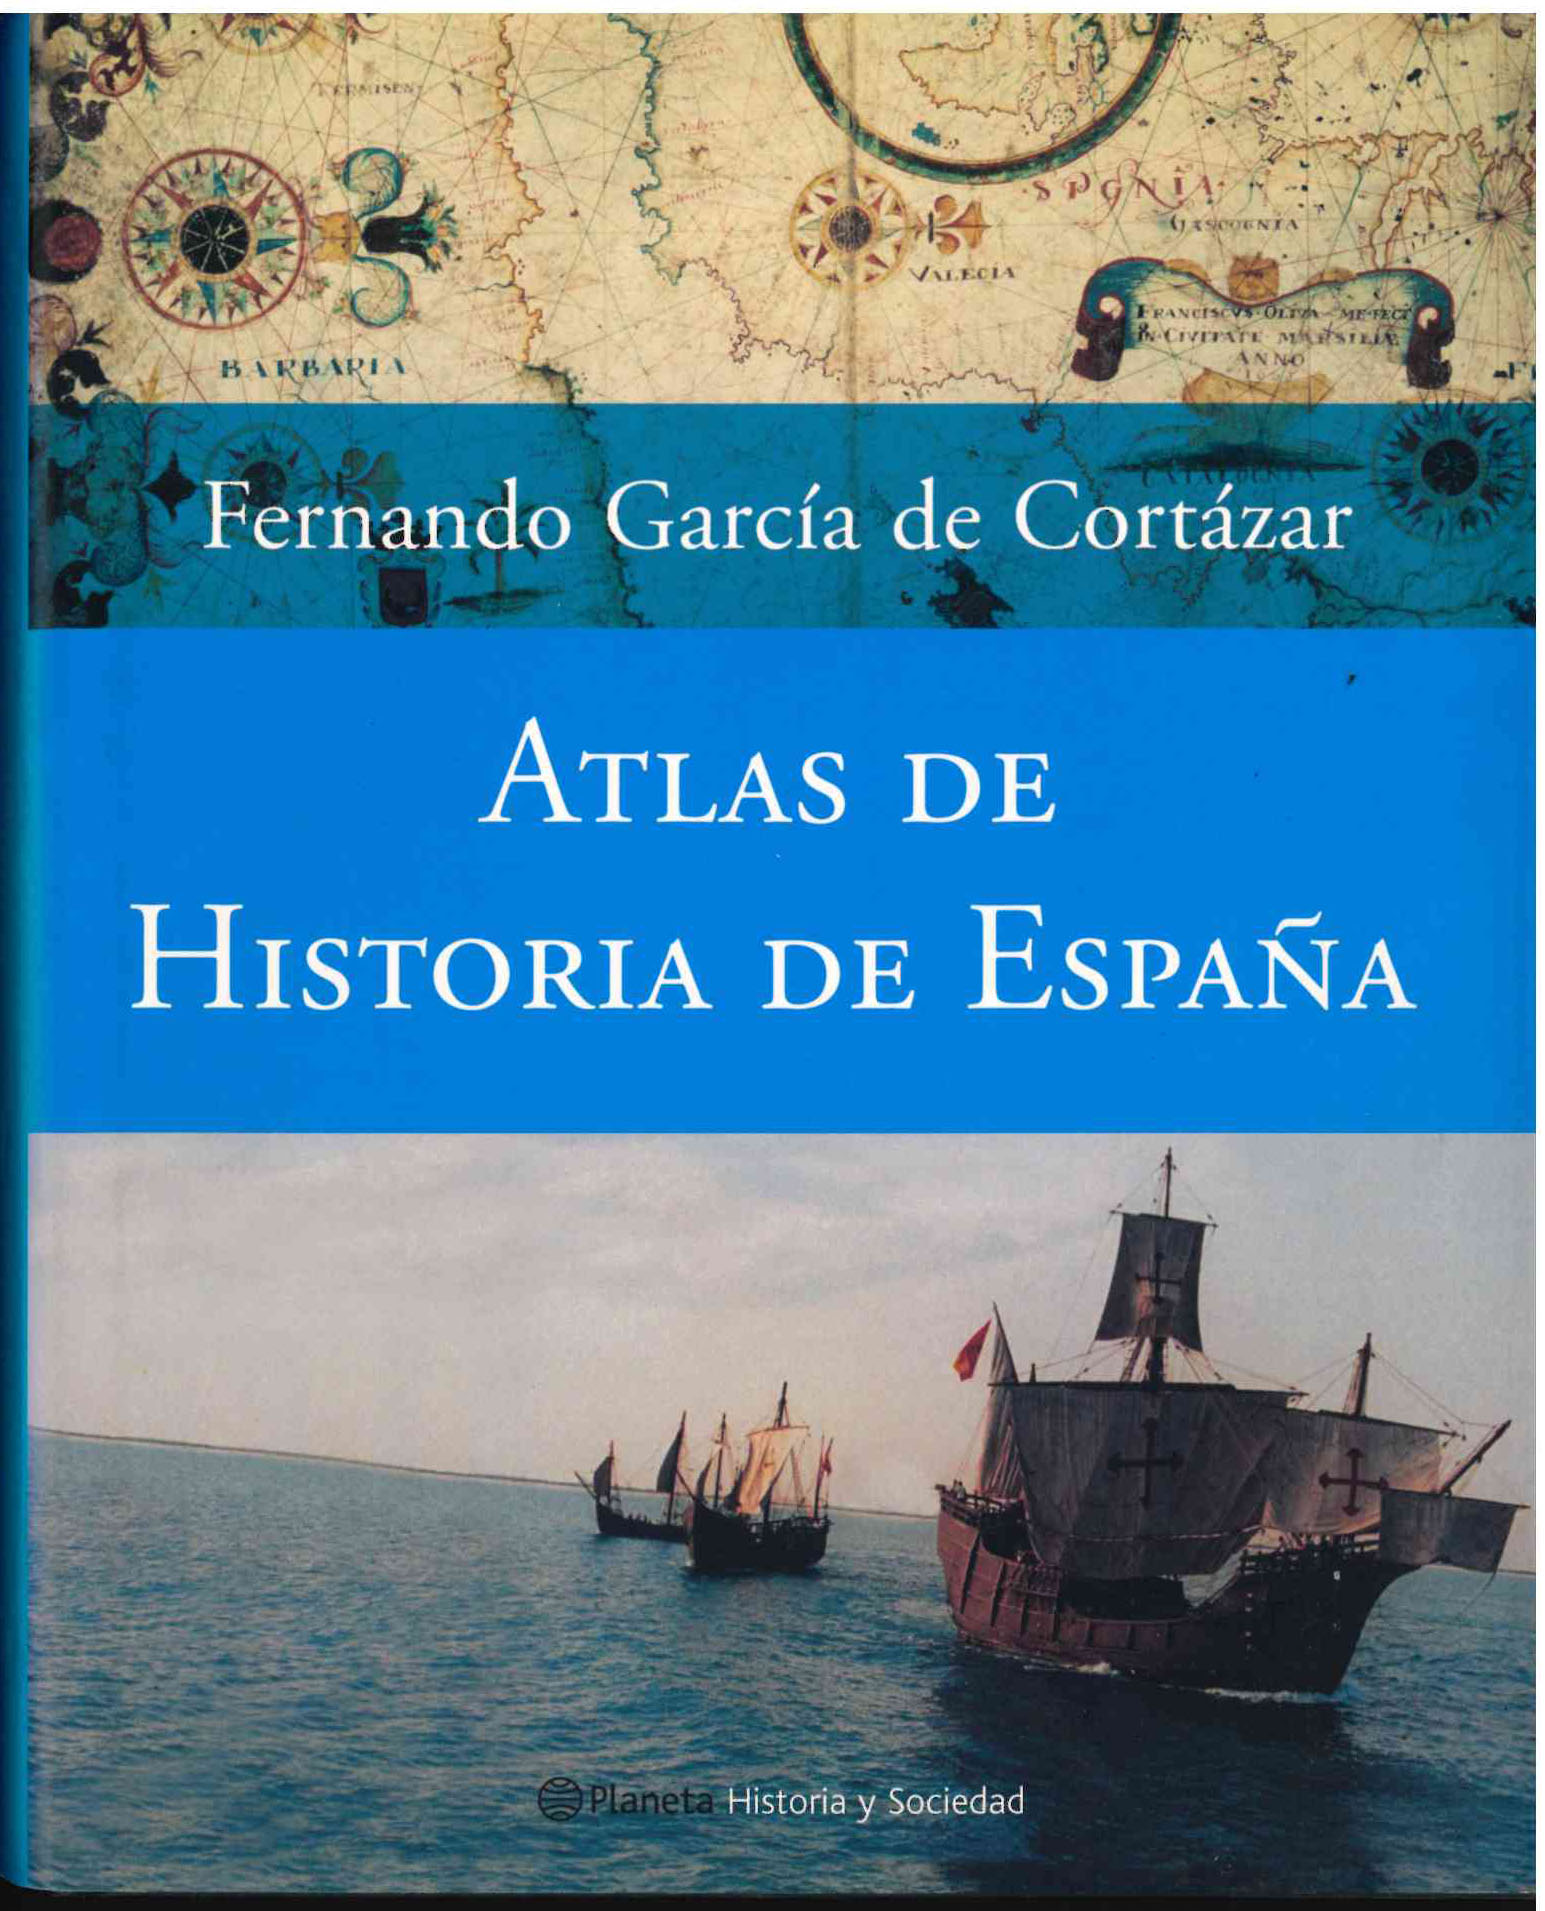 Fernando García de Cortázar. Atlas de Historia de España. Edit. Planeta 2005. SIN USAR